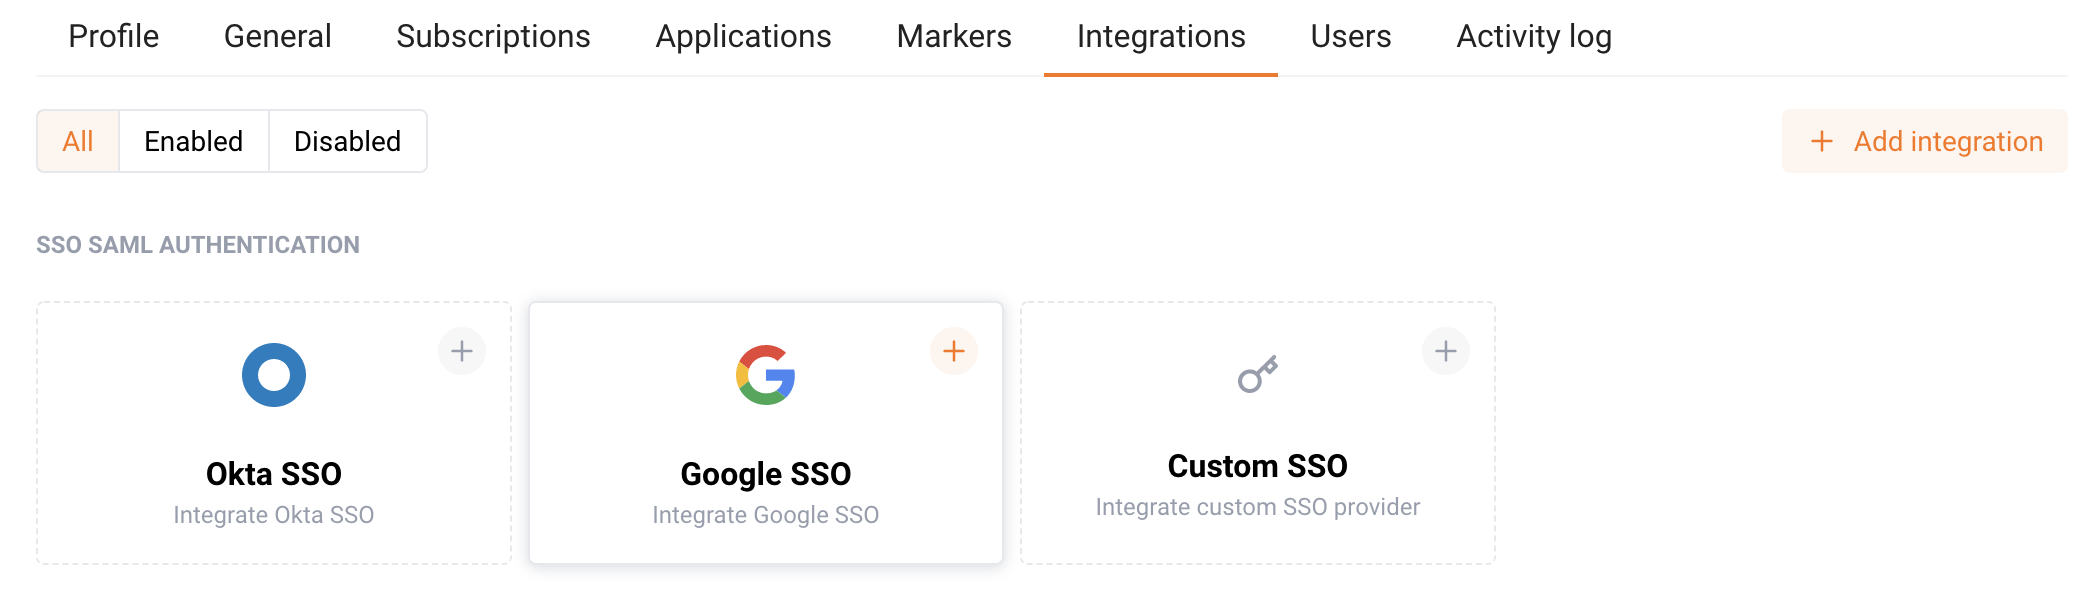 The “Google SSO” block